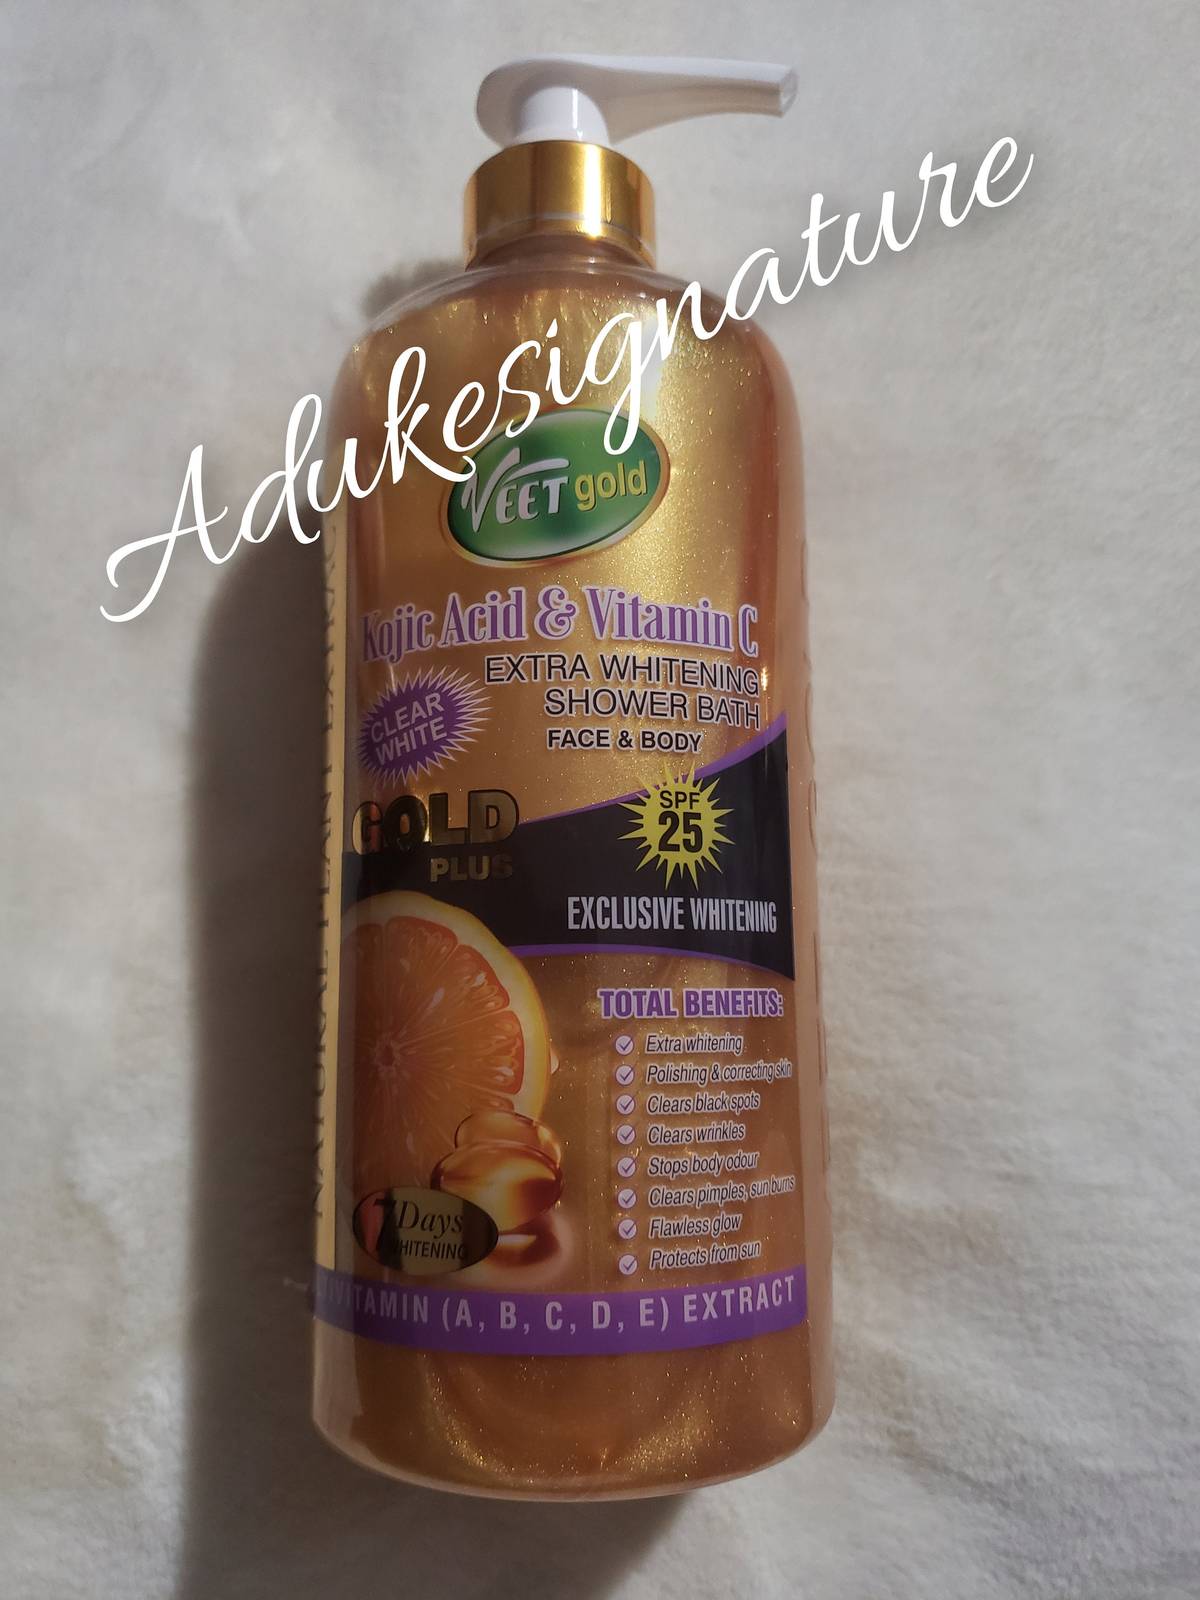 Original Veet gold kojic acid & vitamin C Gold  plus extra whitening shower face